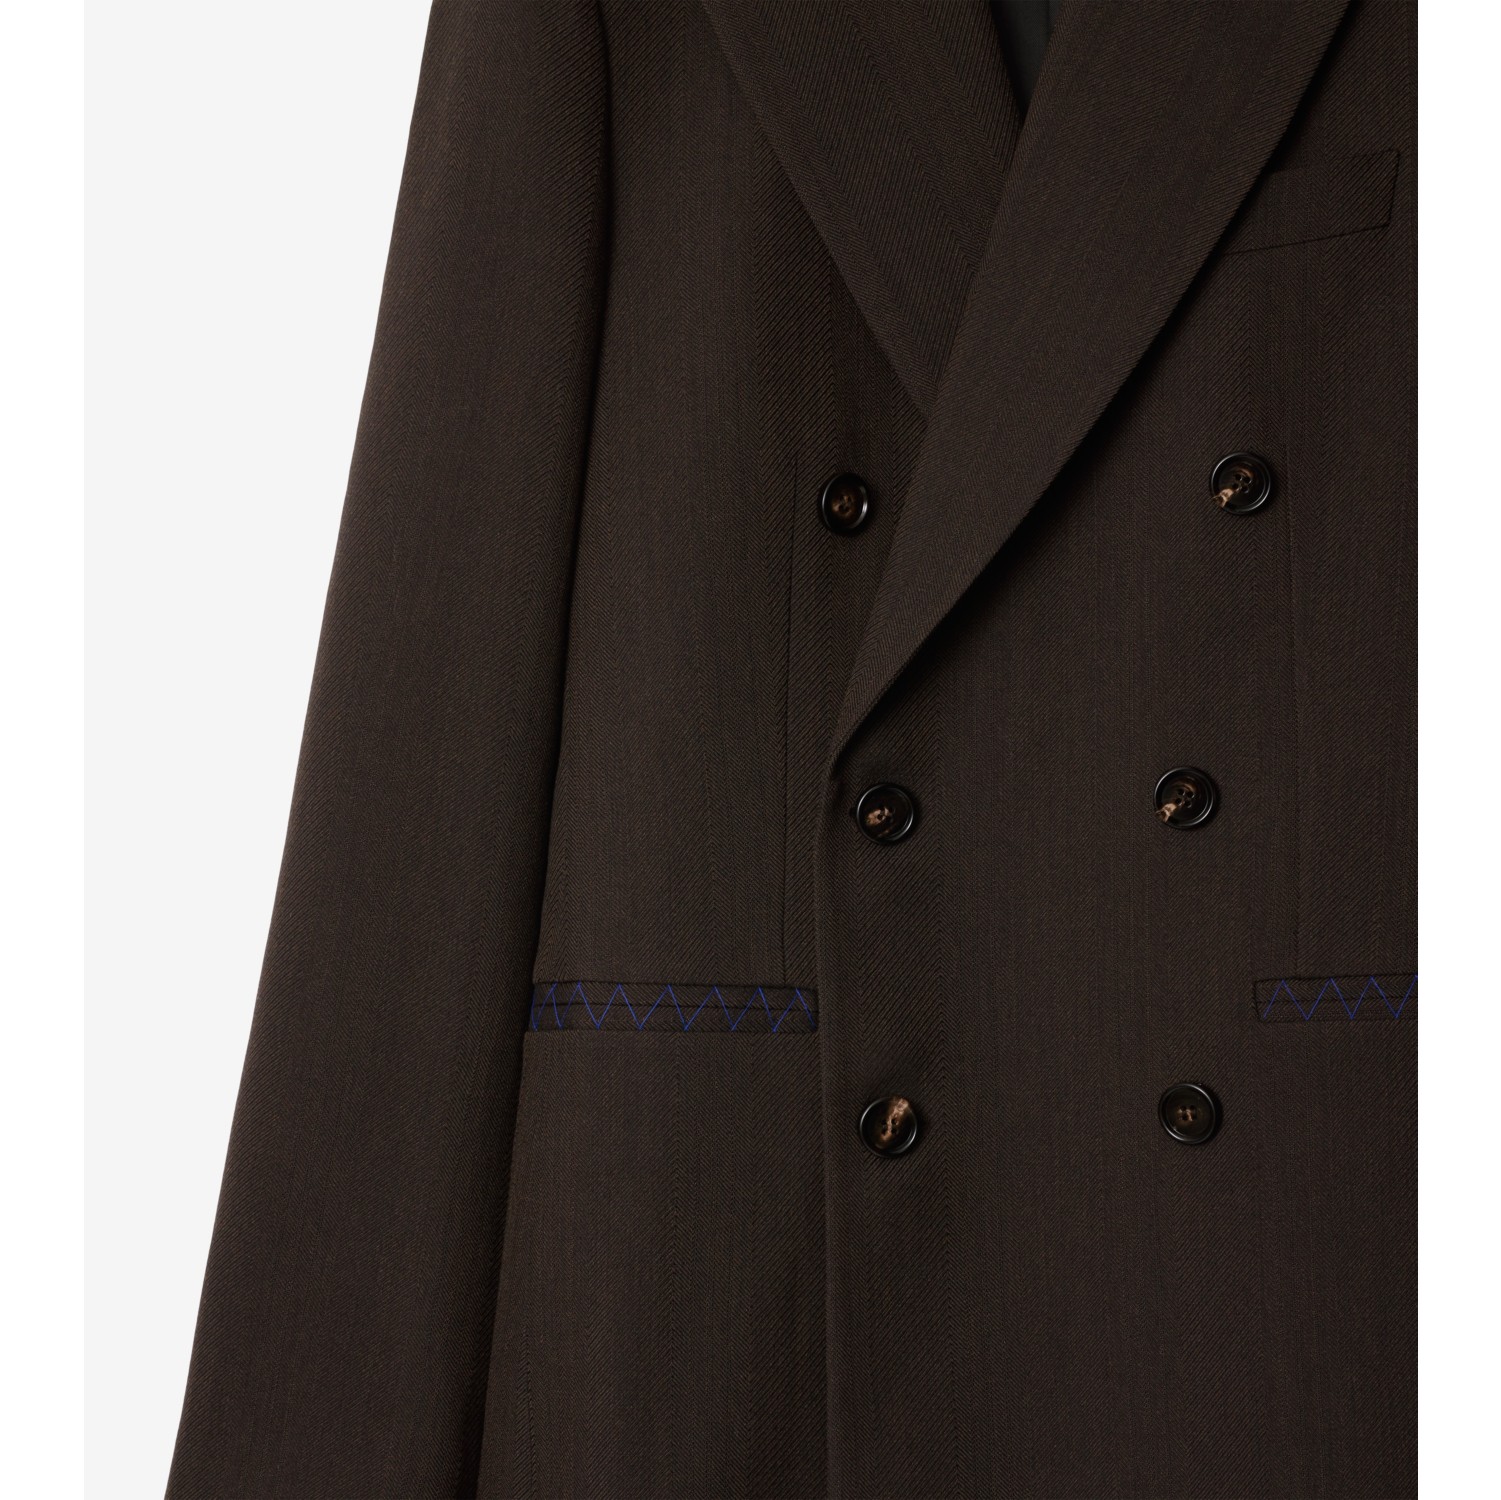 Wool Tailored Jacket